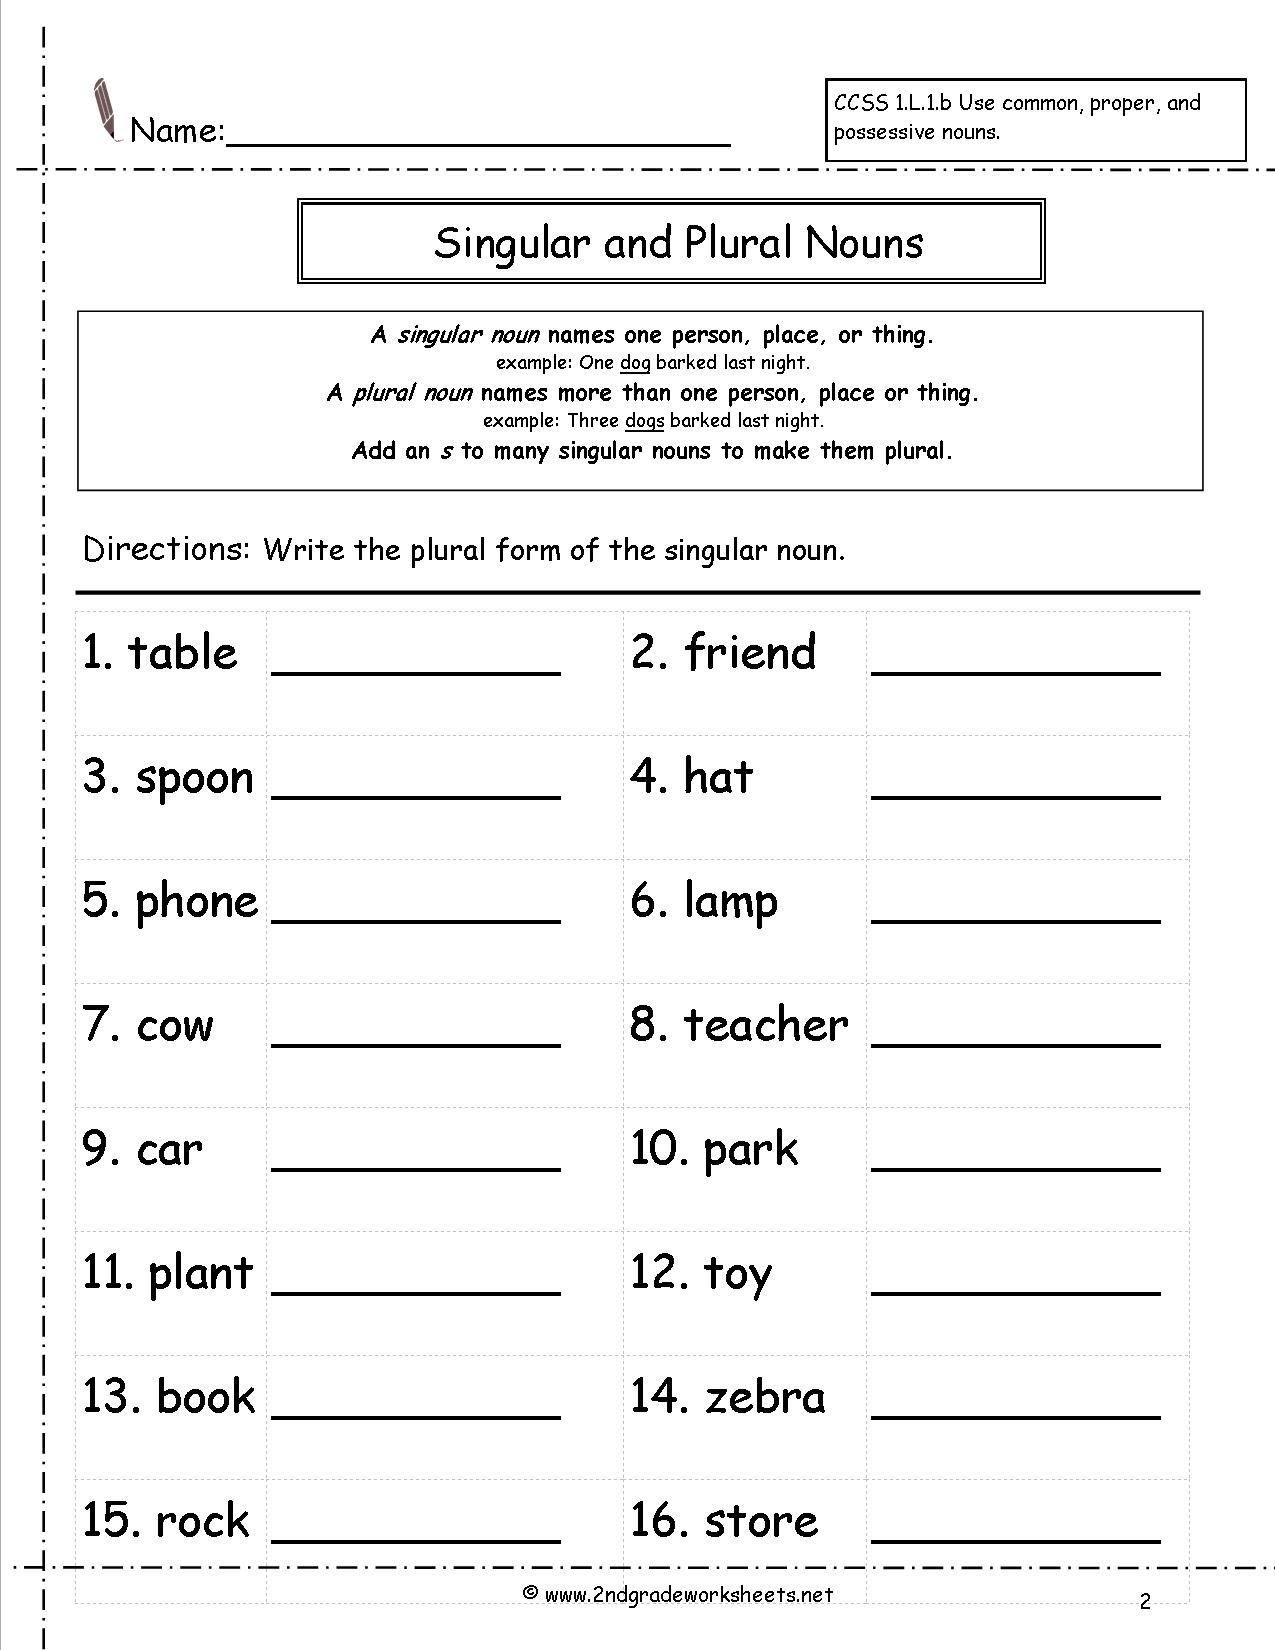 Singular and Plural Nouns Worksheets Grade 1 Image